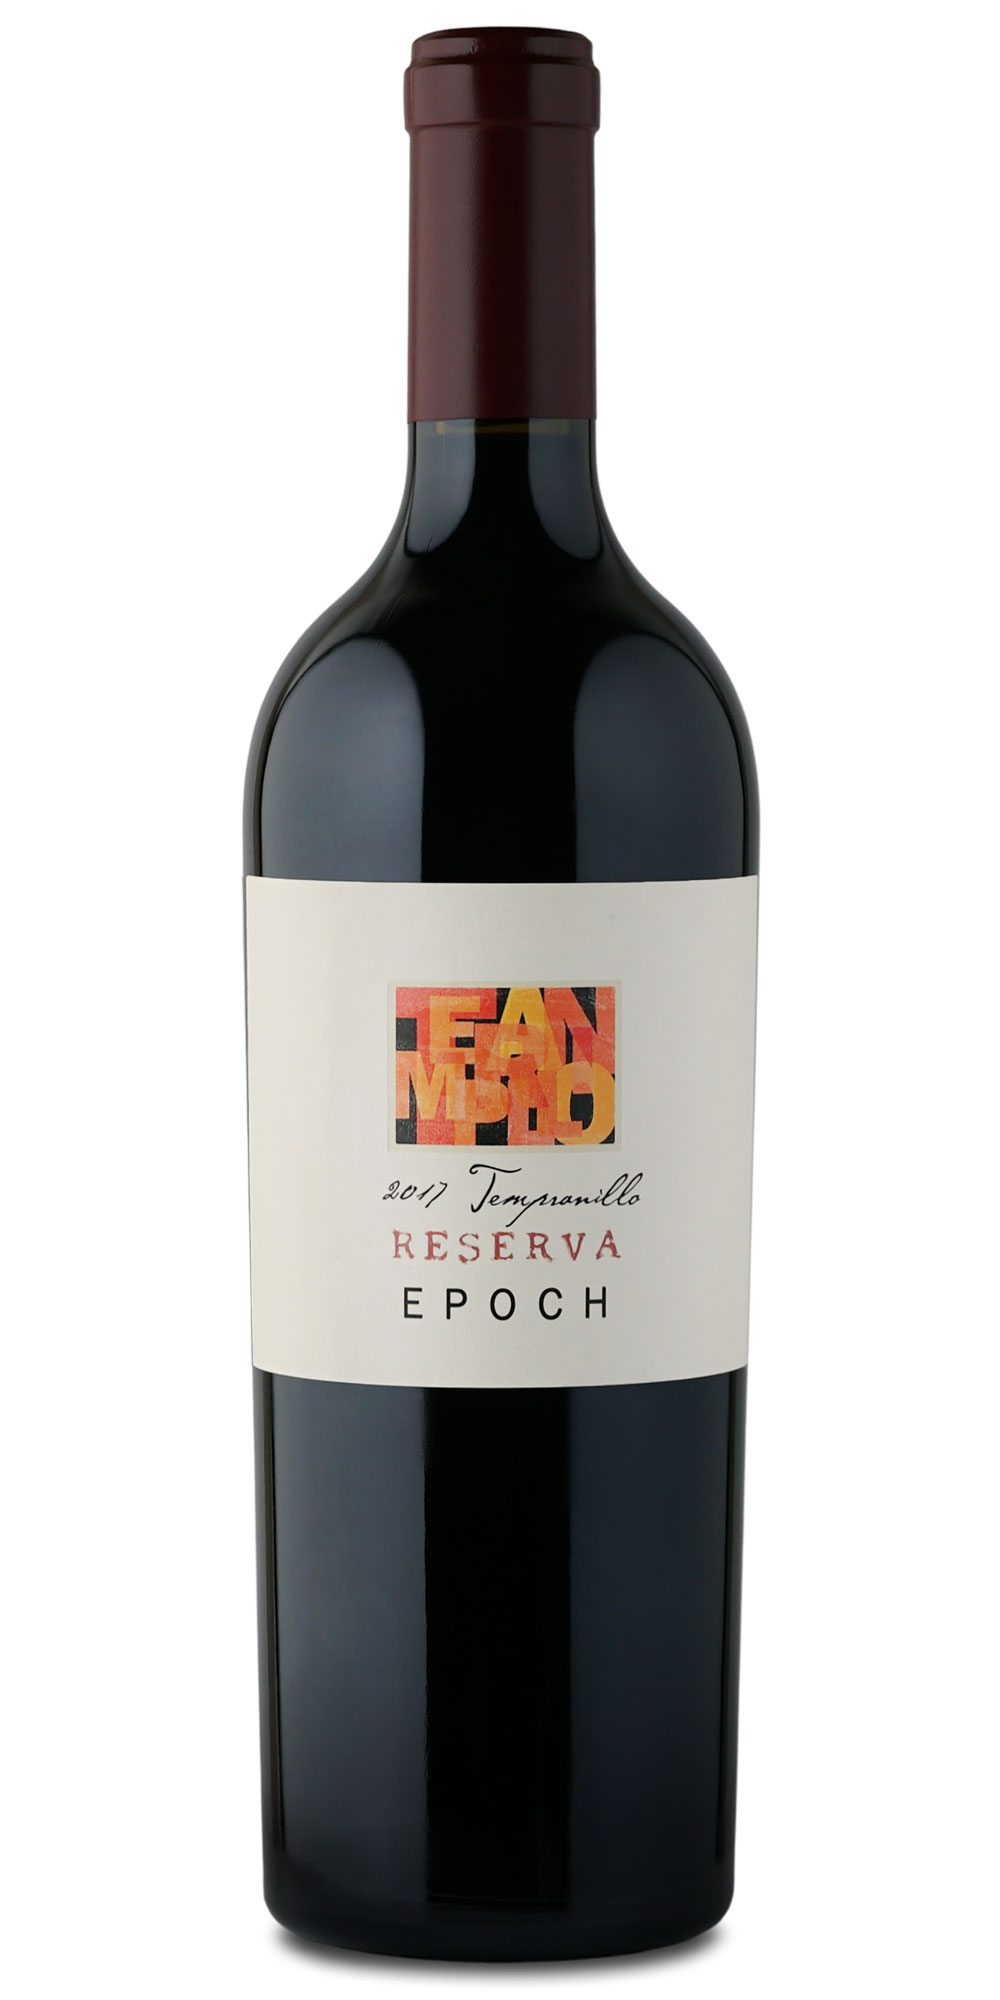 Bottle of 2017 Epoch Reserva Tempranillo